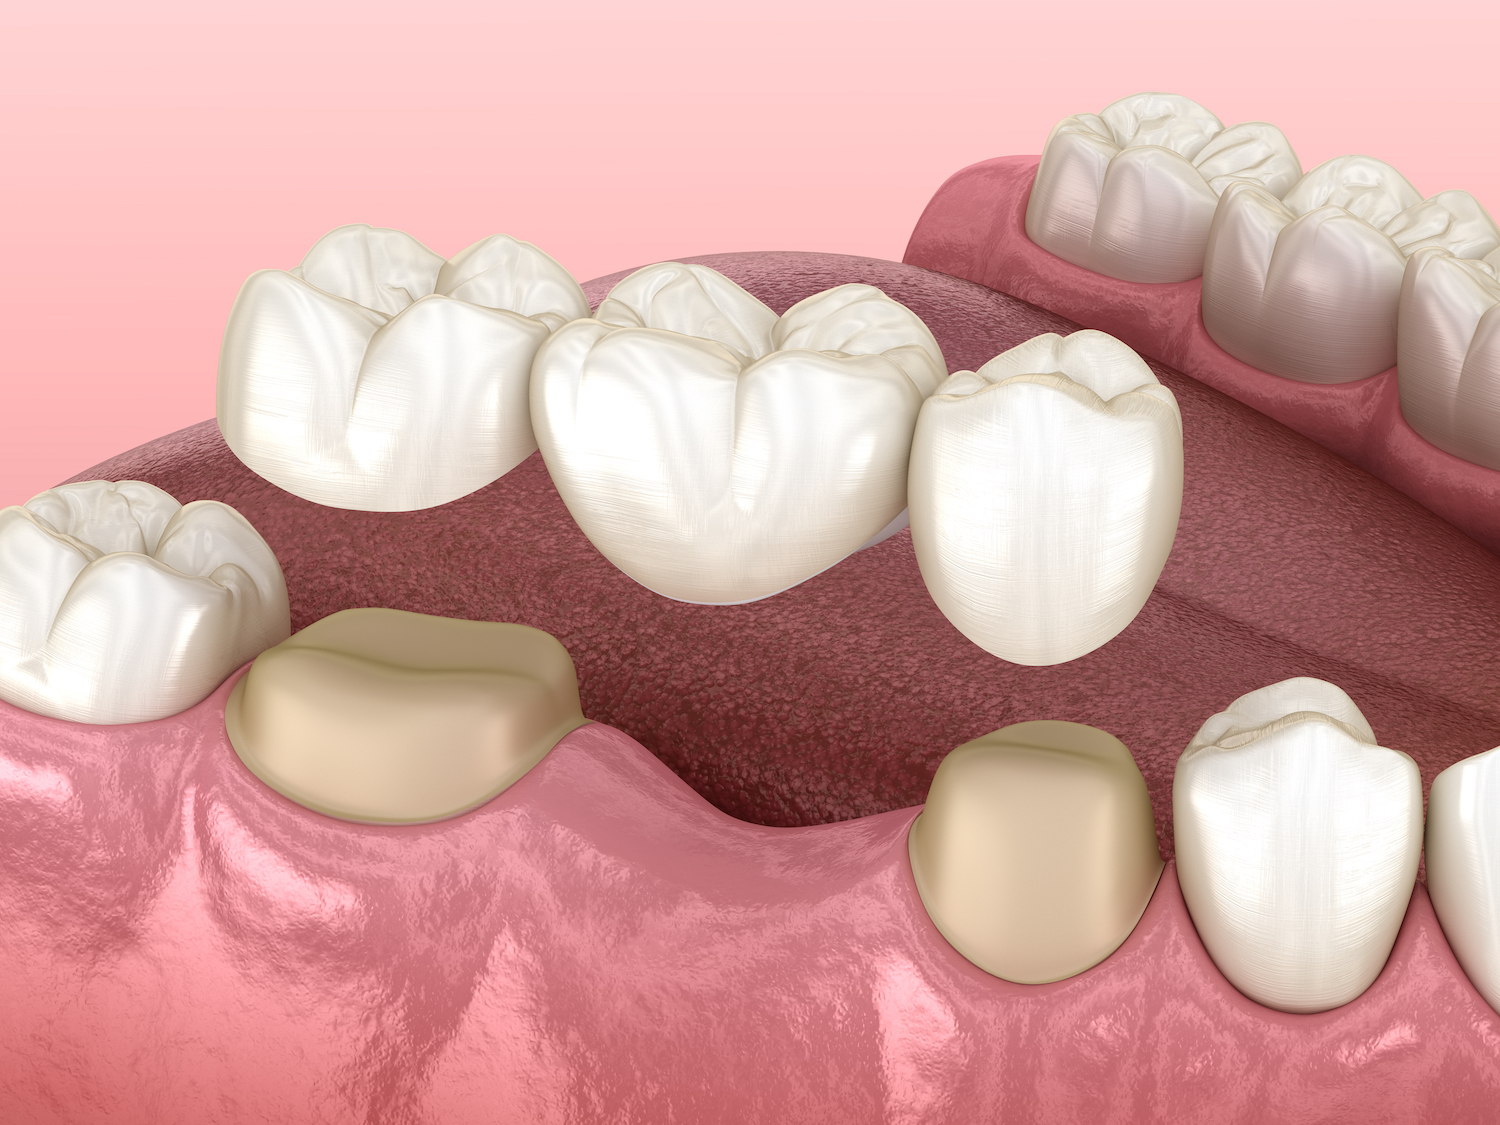 dental bridge, missing teeth, dental bridges, teeth replacement, restorative dentistry, dentist in Amarillo